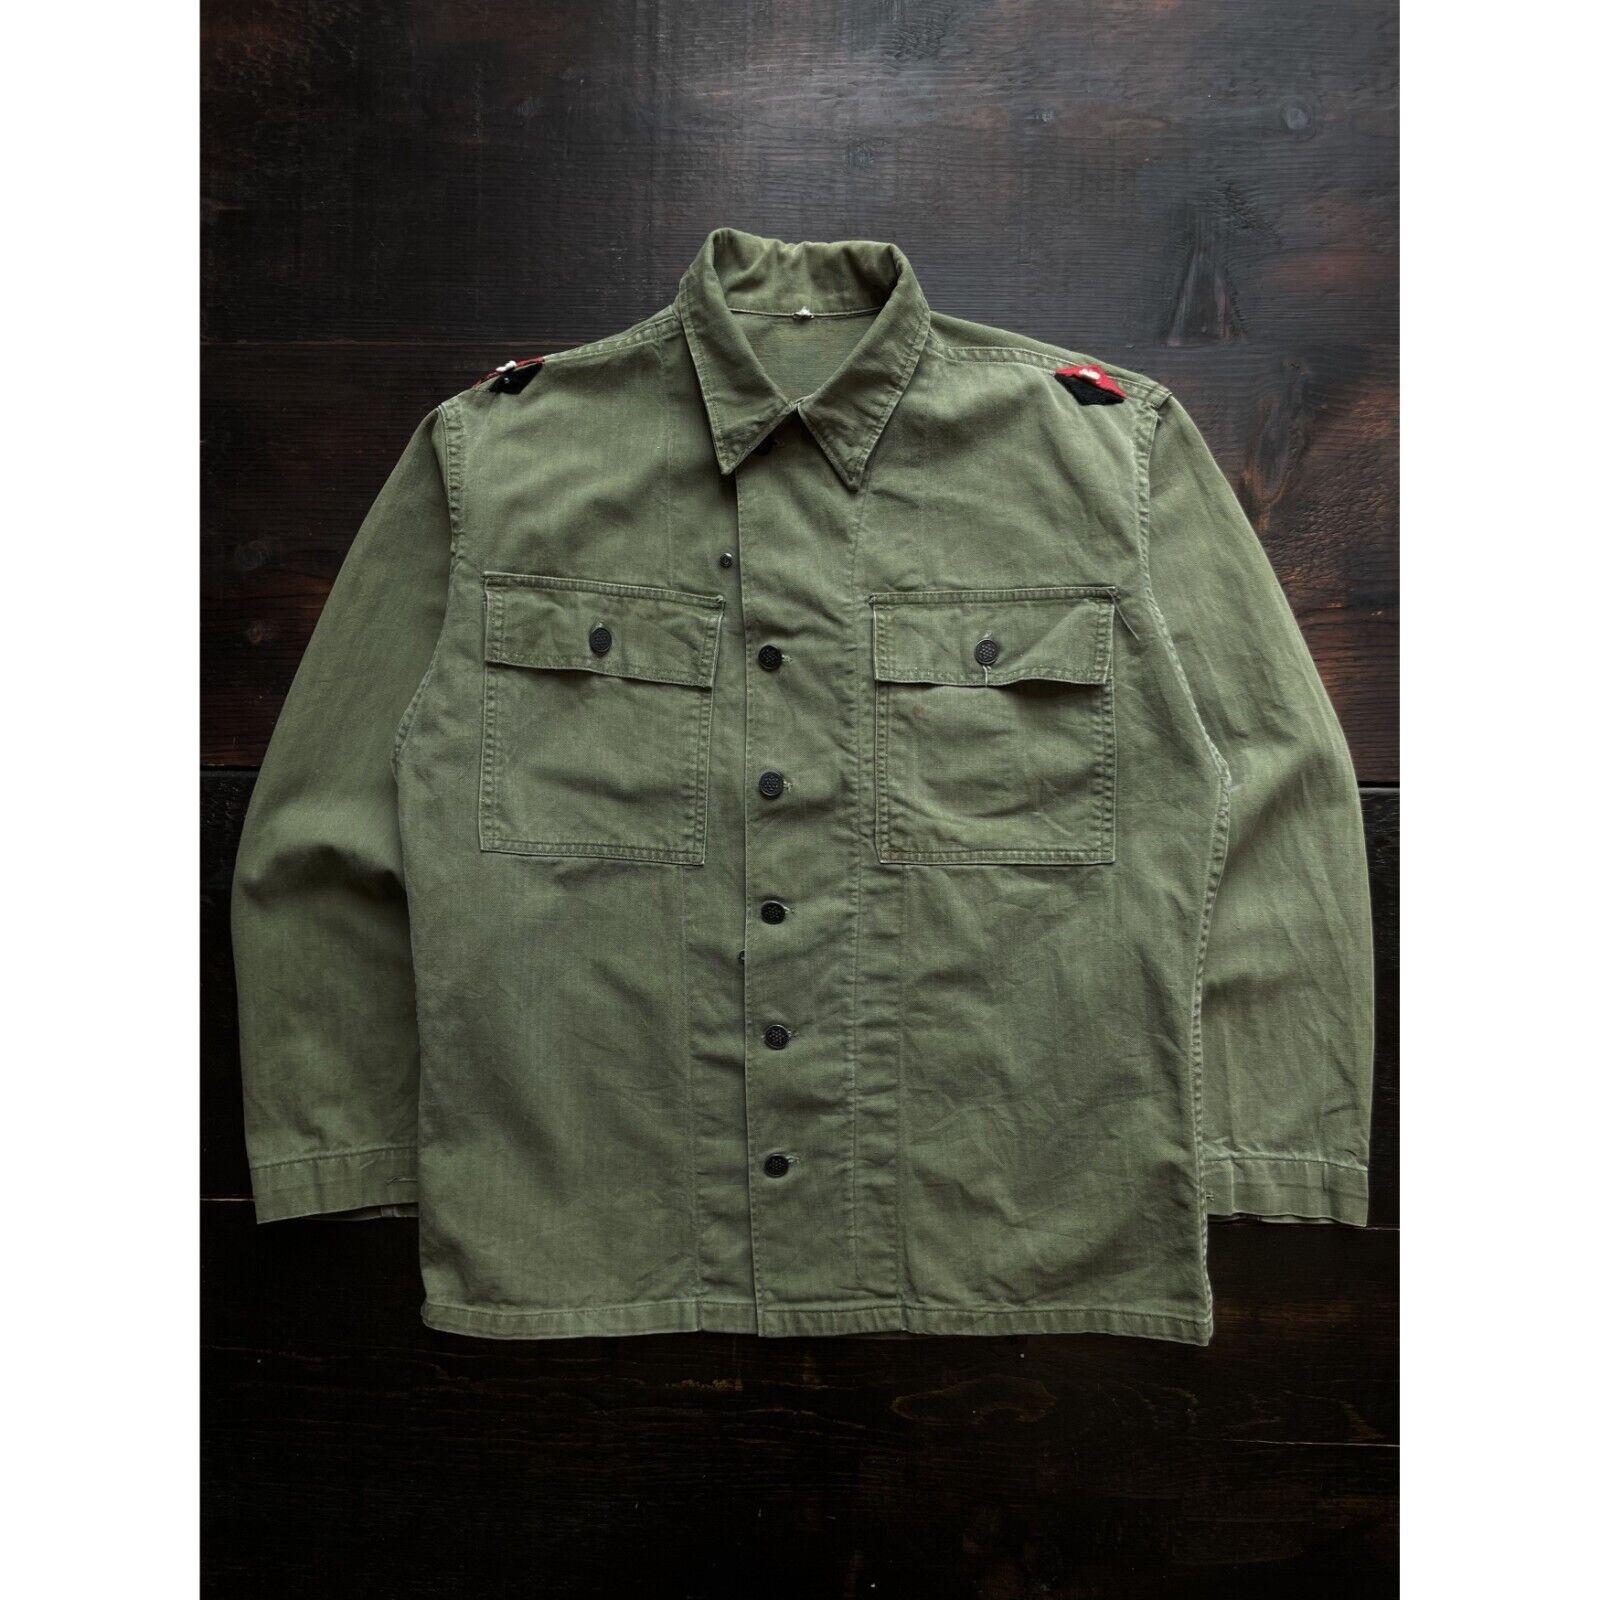 True Vintage 40s 13-Star Button HBT Military Shirt Size Large WW2 Square Pocket